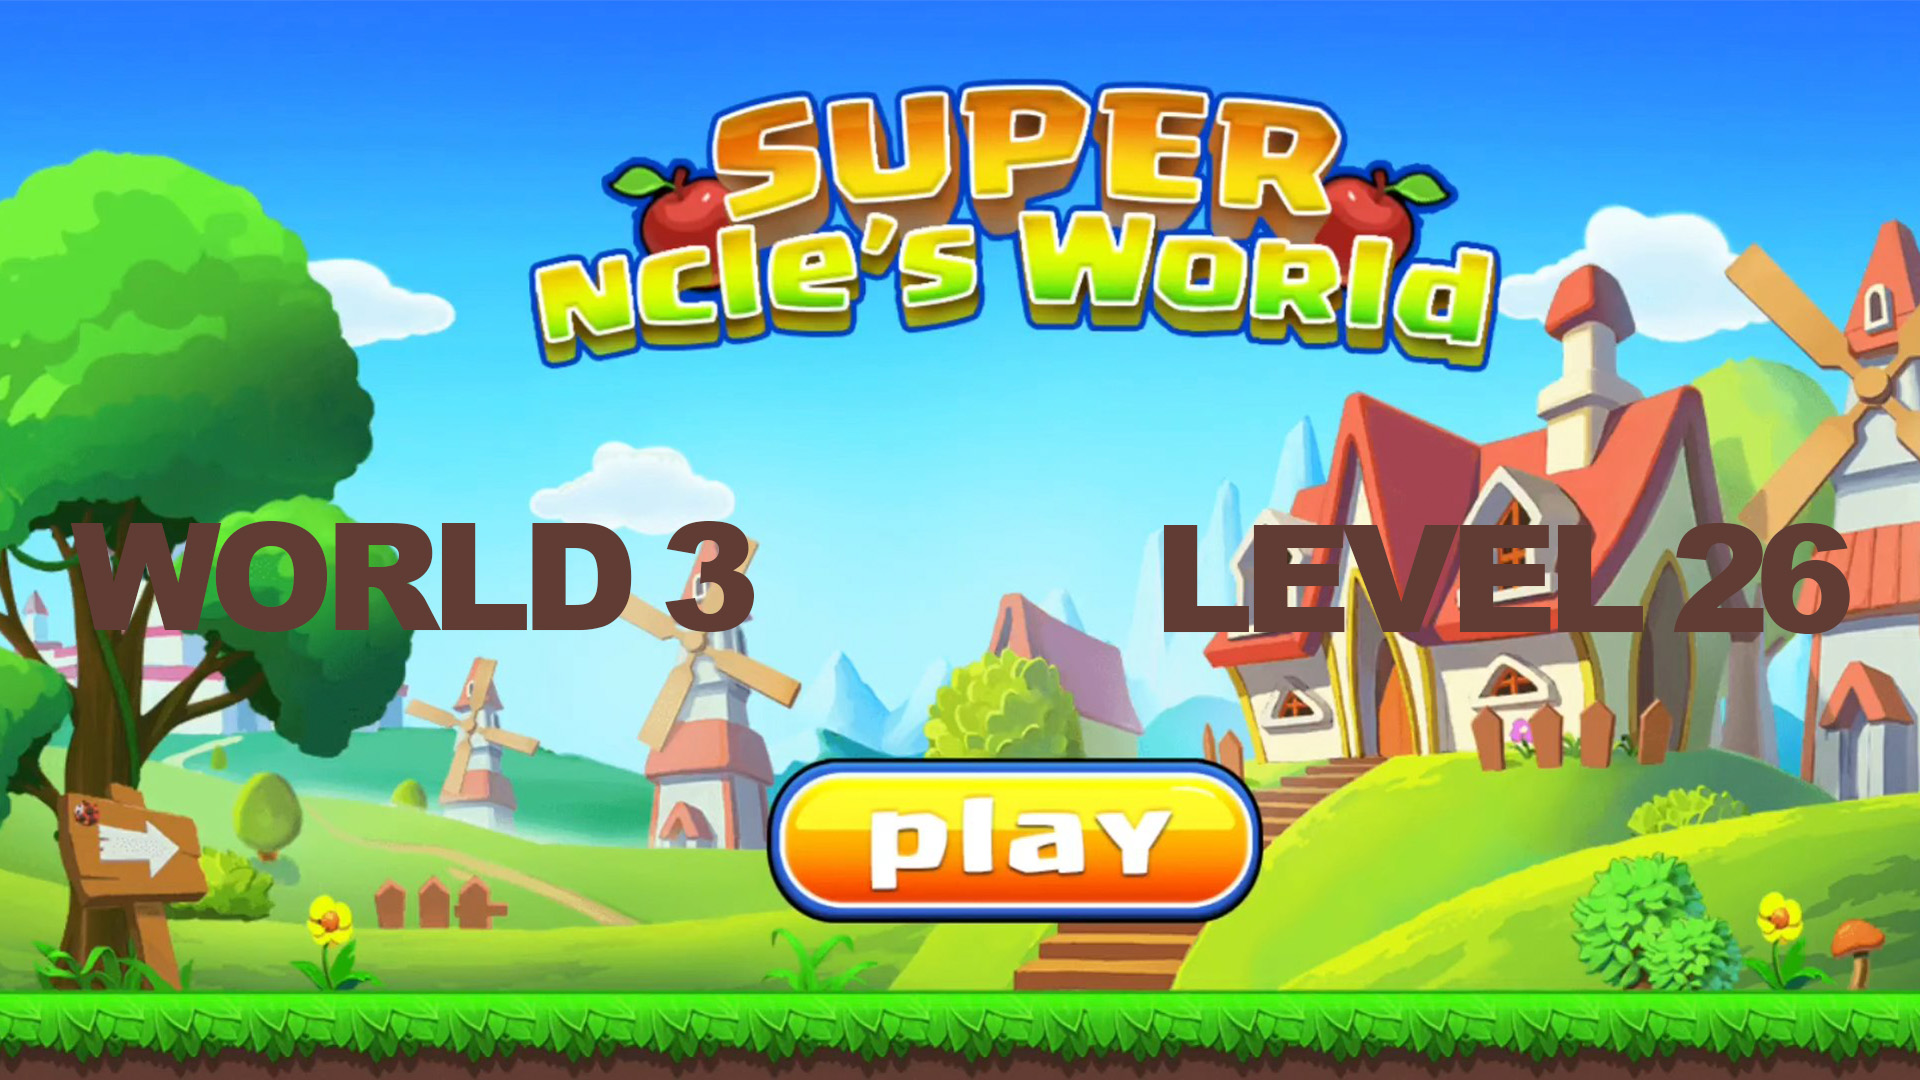 Super ncle's  World 3. Level 26.